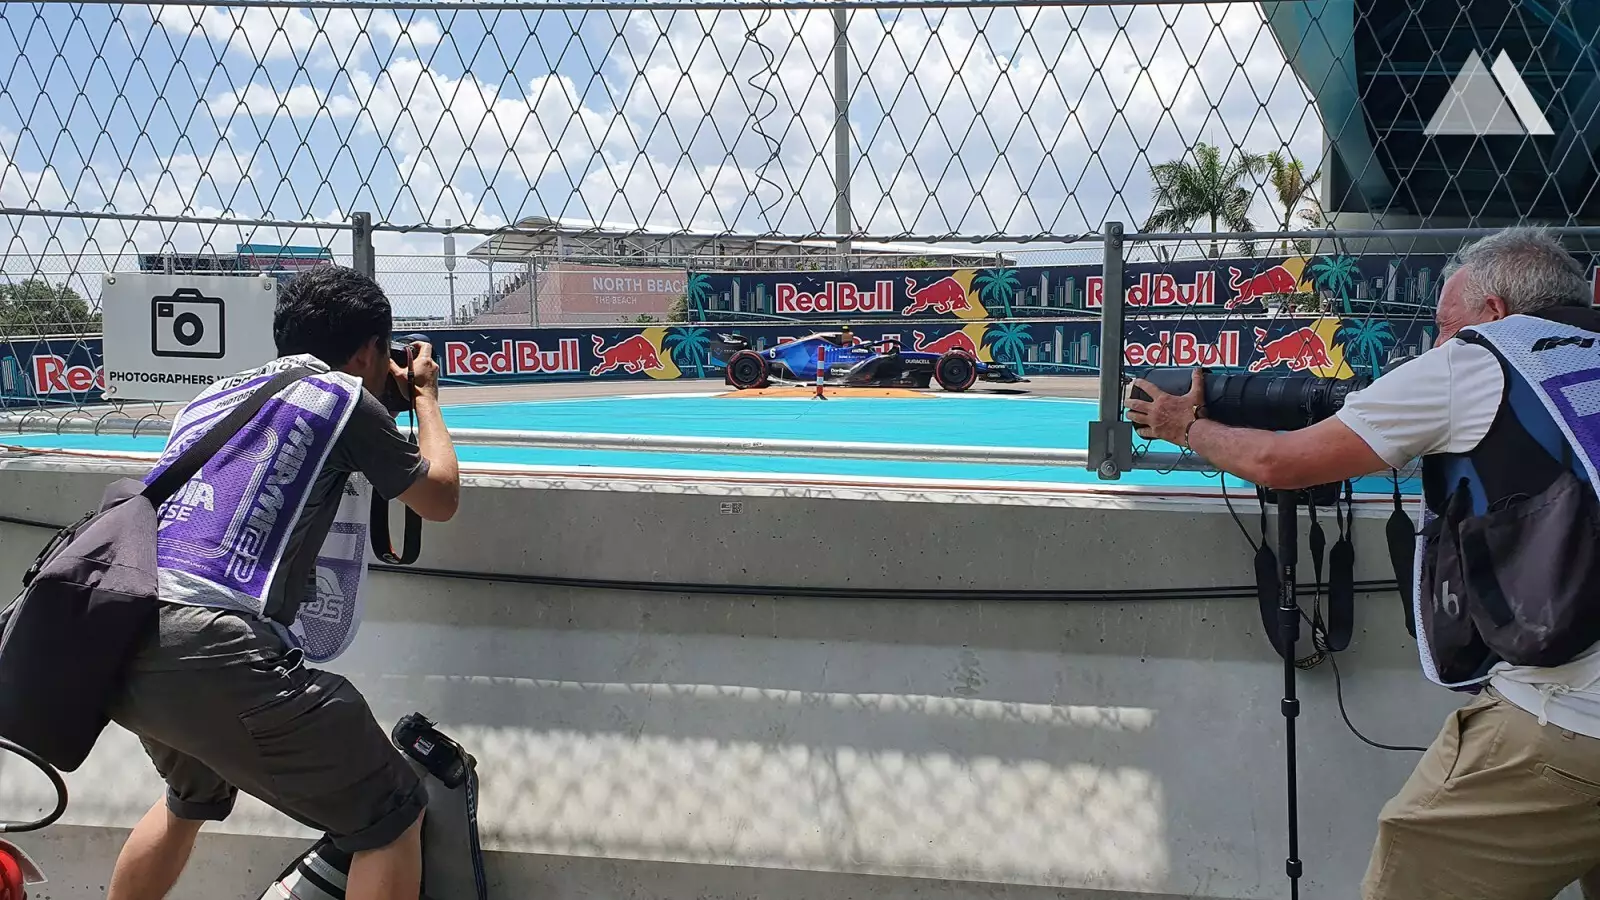 Race Tracks - Miami International Autodromo 2022